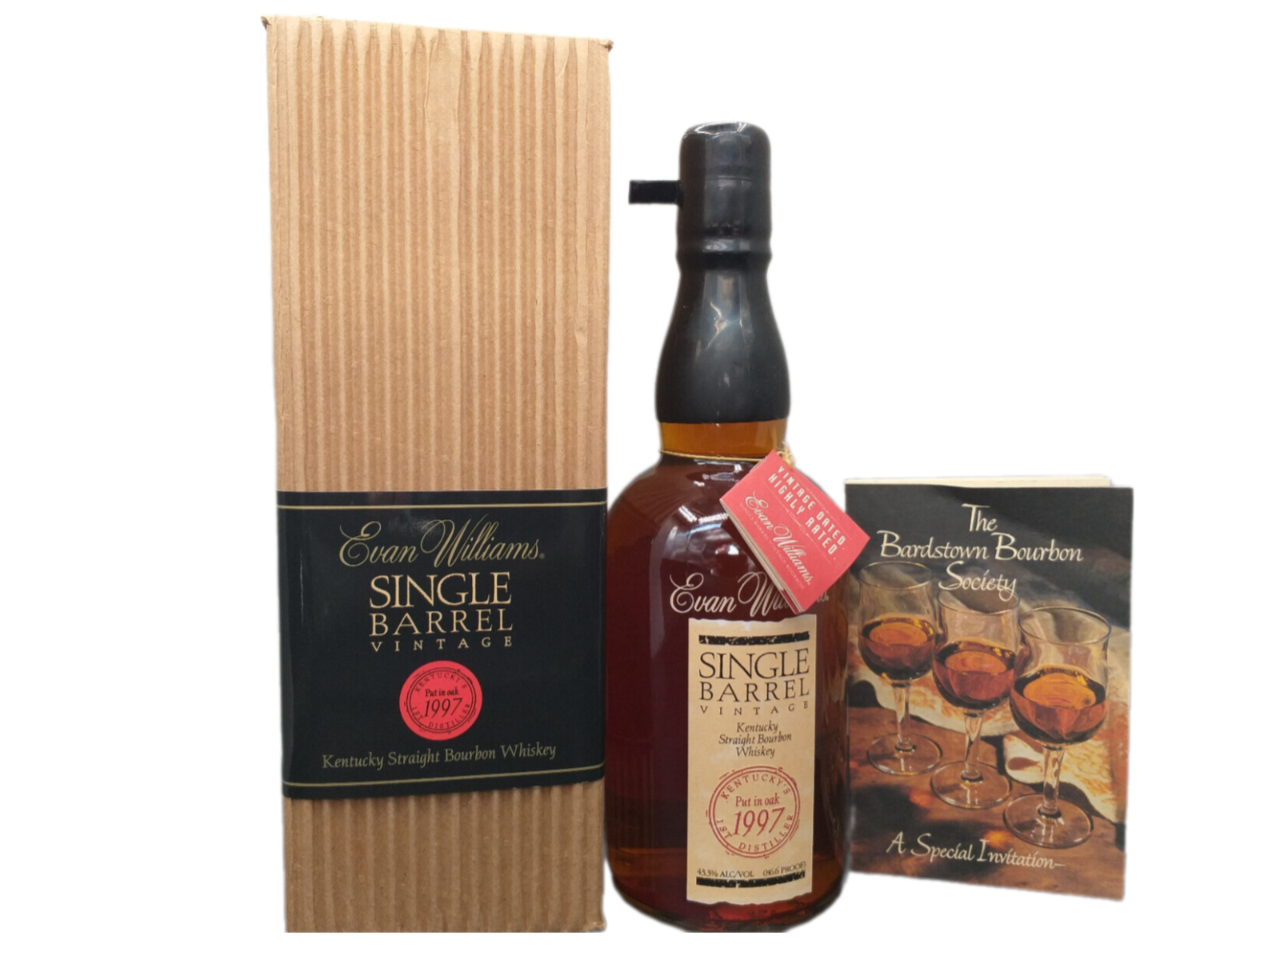 Evan Williams 10 Jahre Single Barrel Vintage 1997 Kentucky Straight Bourbon Whiskey 43,3% VOL. (1x0,70ltr.) OVP